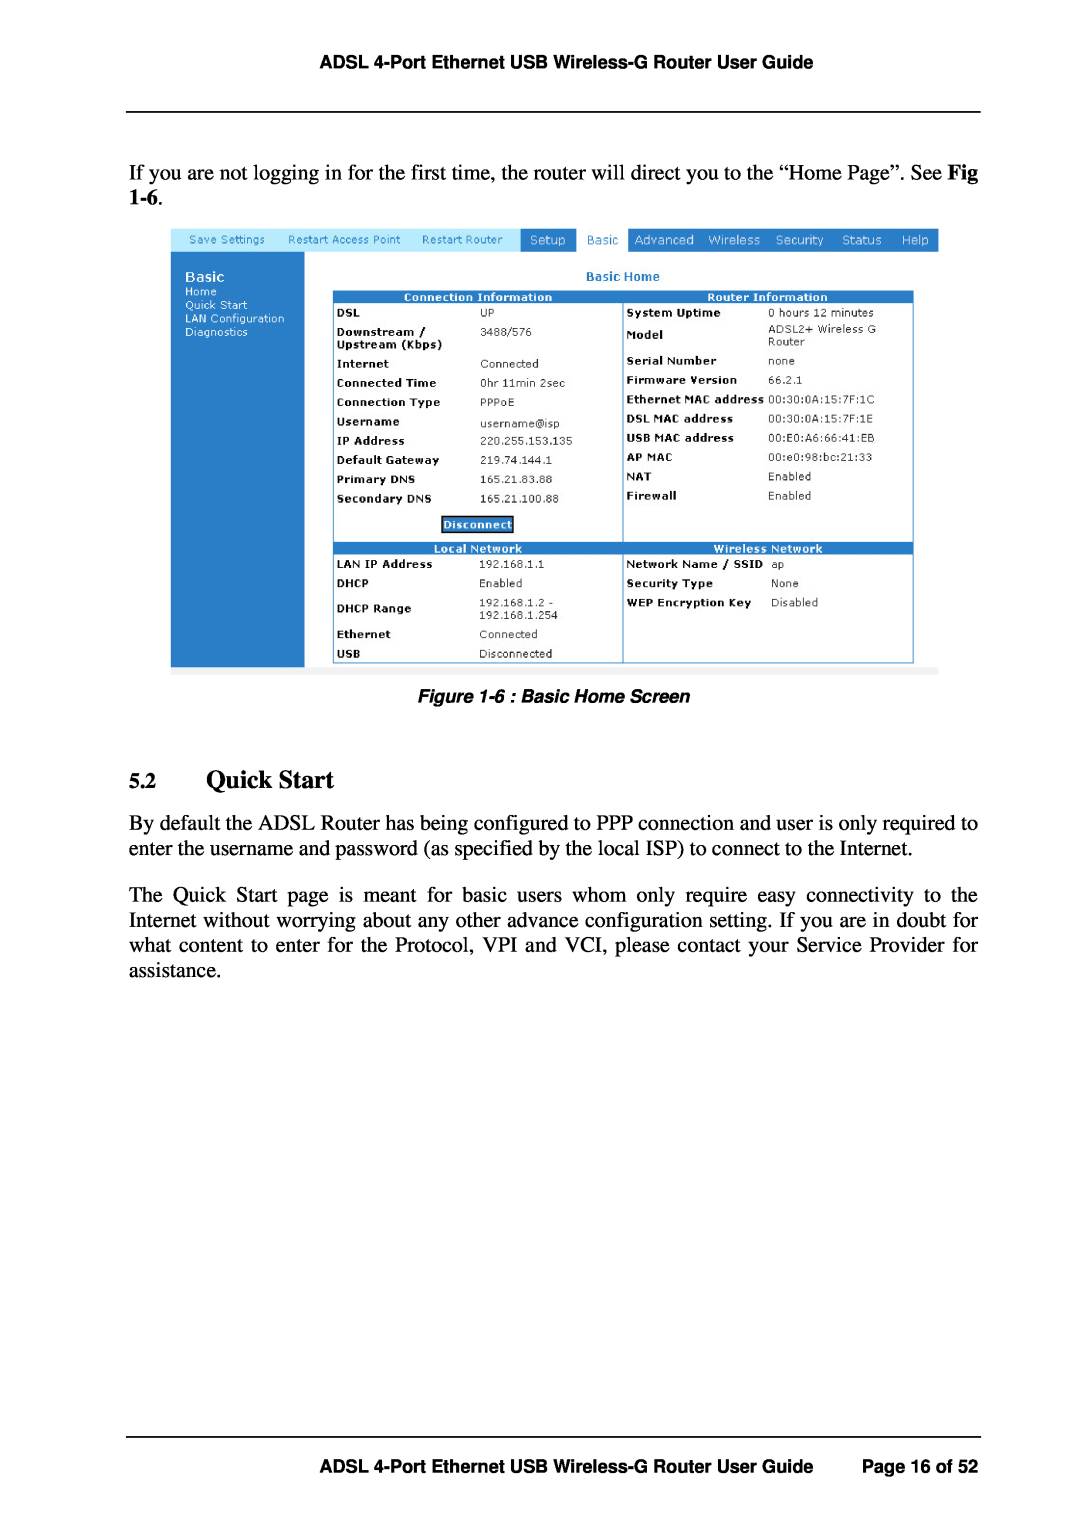 APC ADSL 4-Port manual Quick Start, 6 Basic Home Screen 